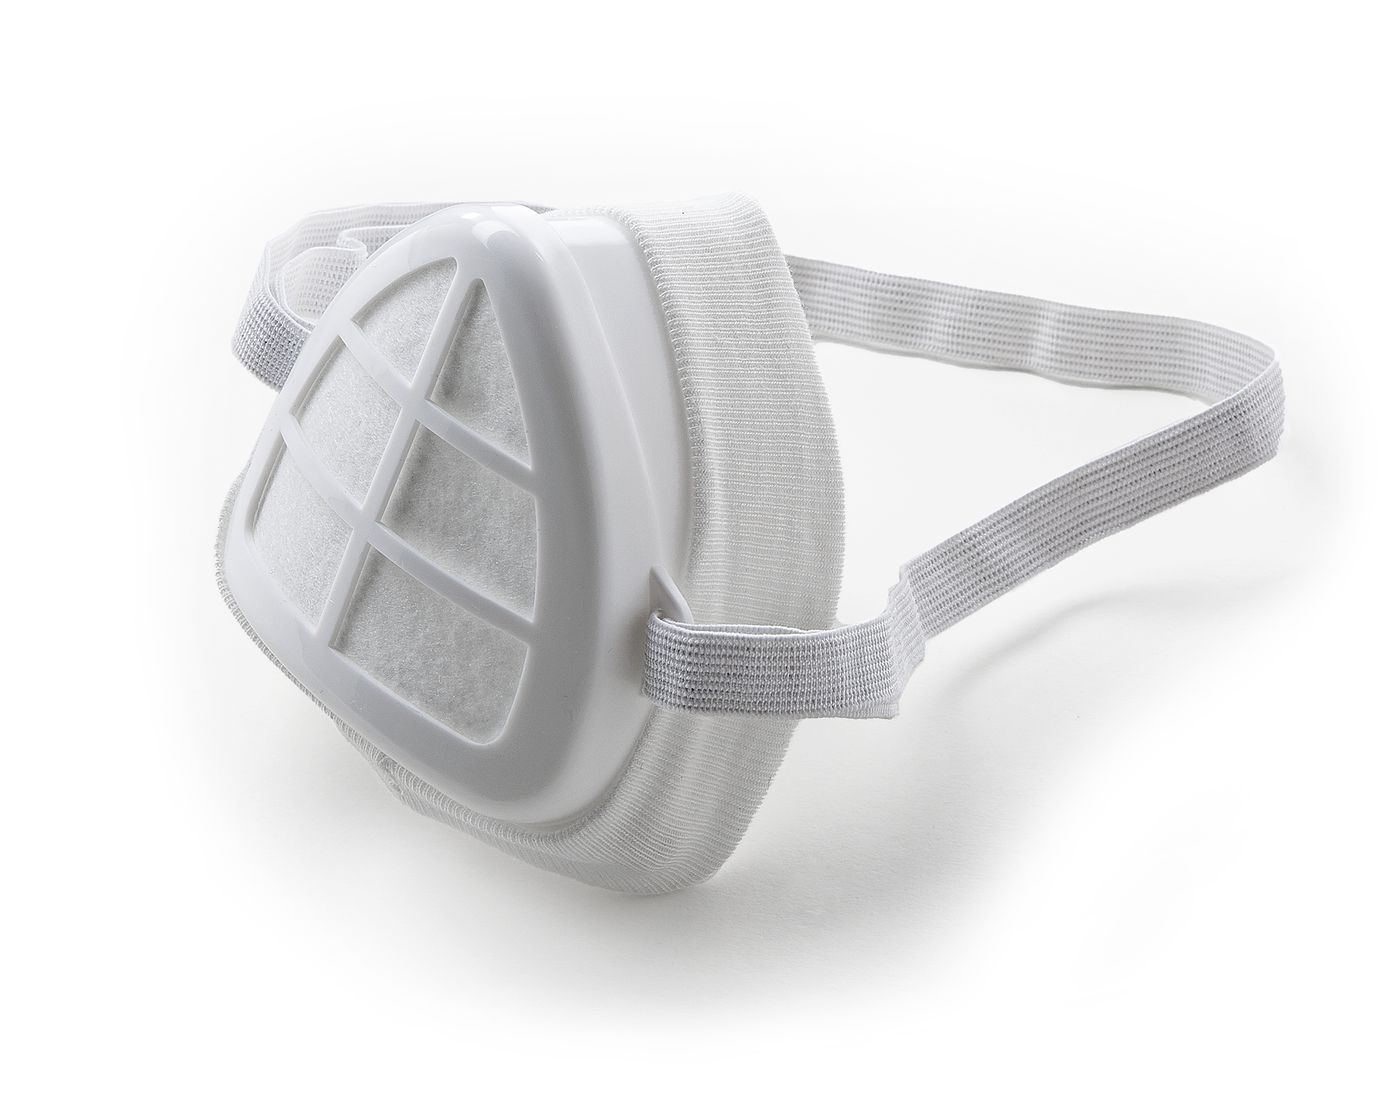 Staubmaske
Filter mask
Masque anti-poussière
Carátula contra p